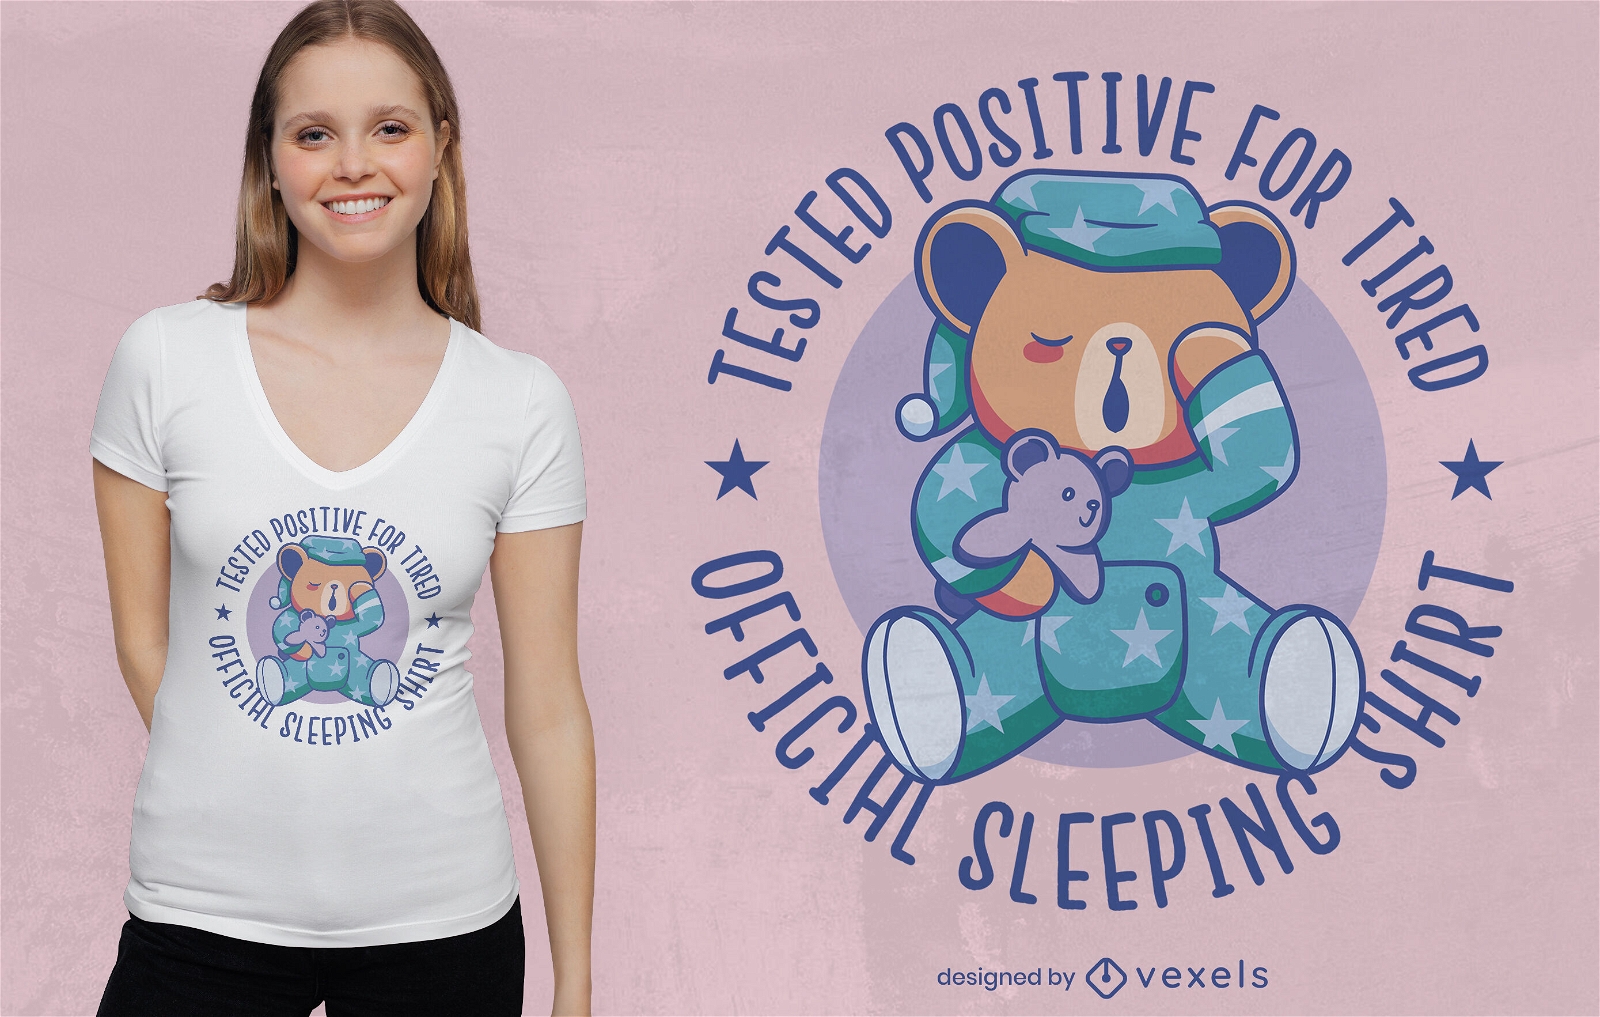 Sleepy teddy bear toy t-shirt design